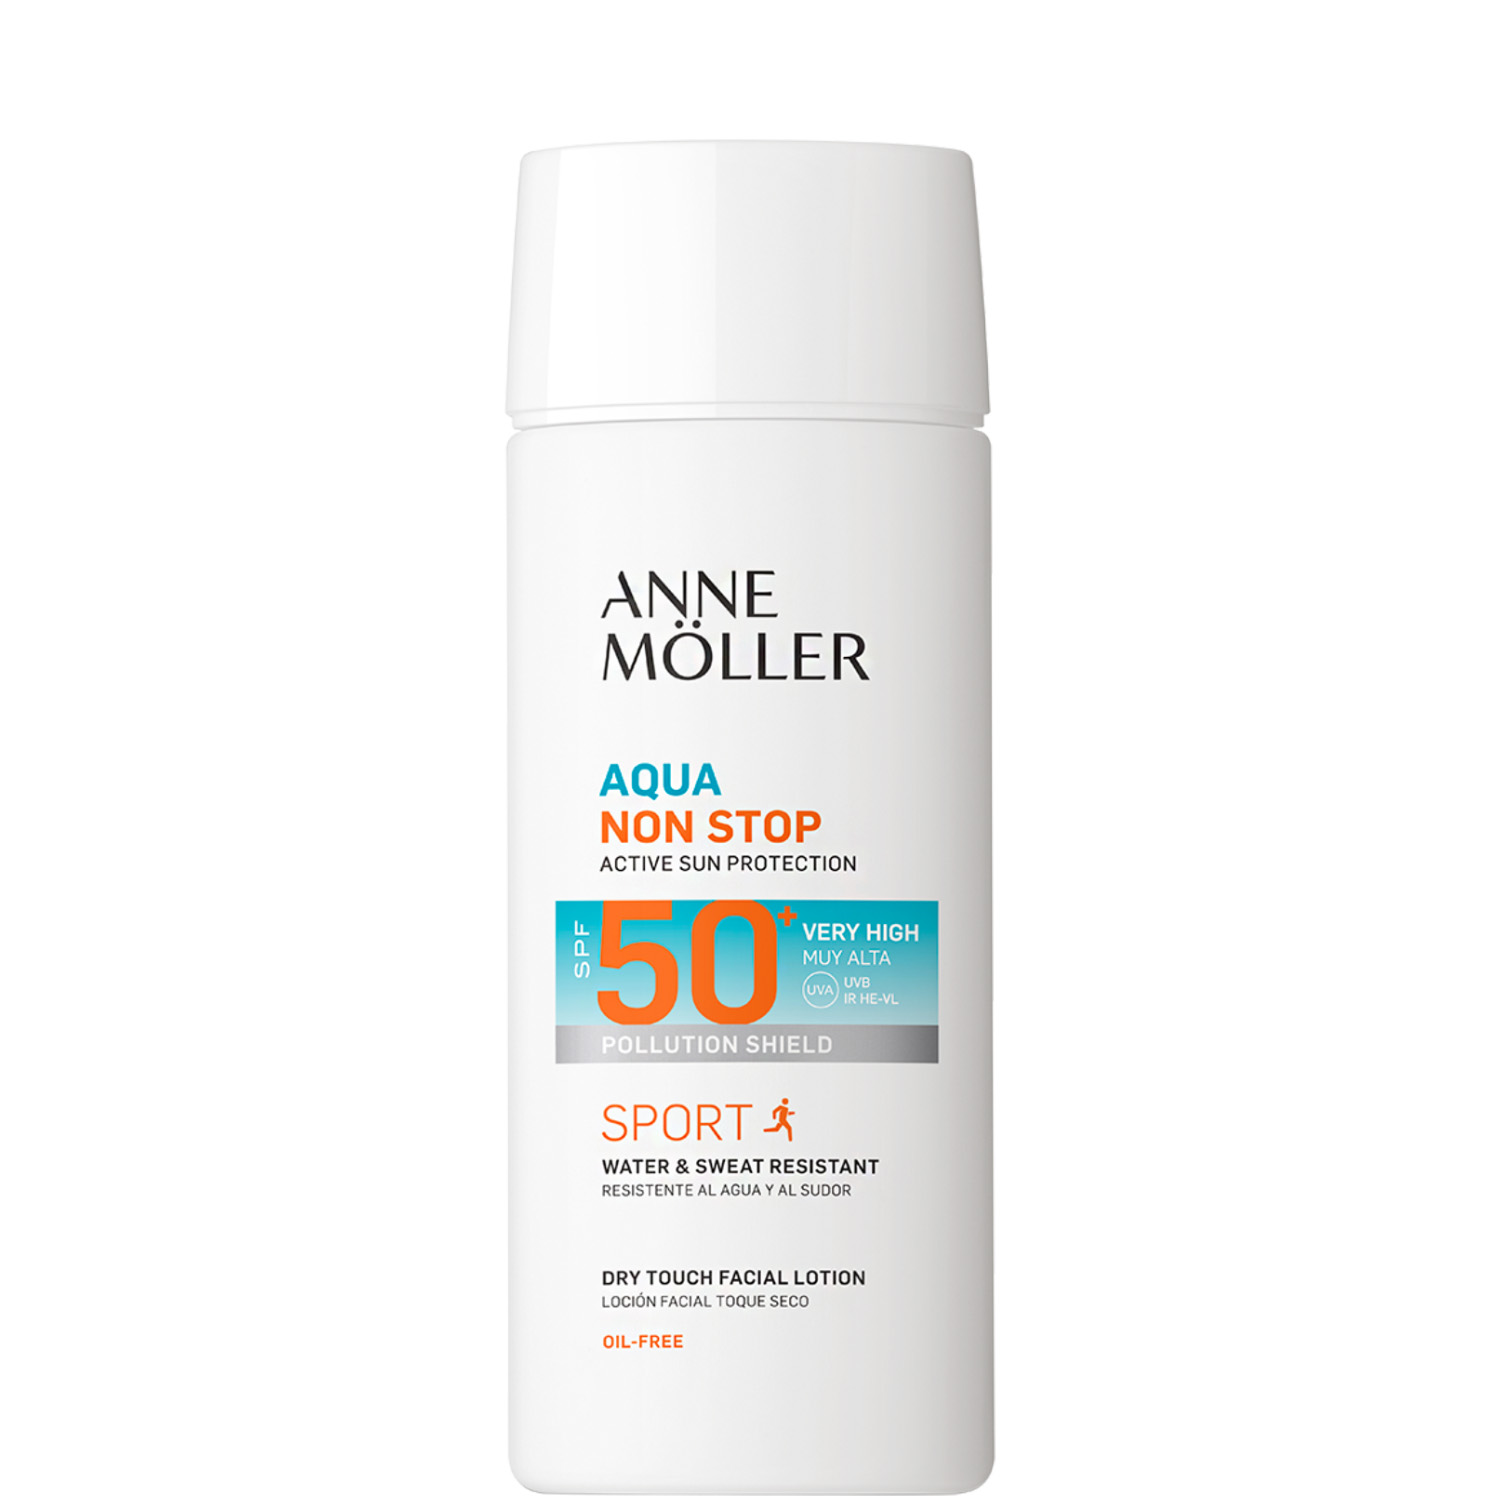 Anne Möller Aqua Non Stop Dry Touch Facial Lotion SPF50+ 75ml